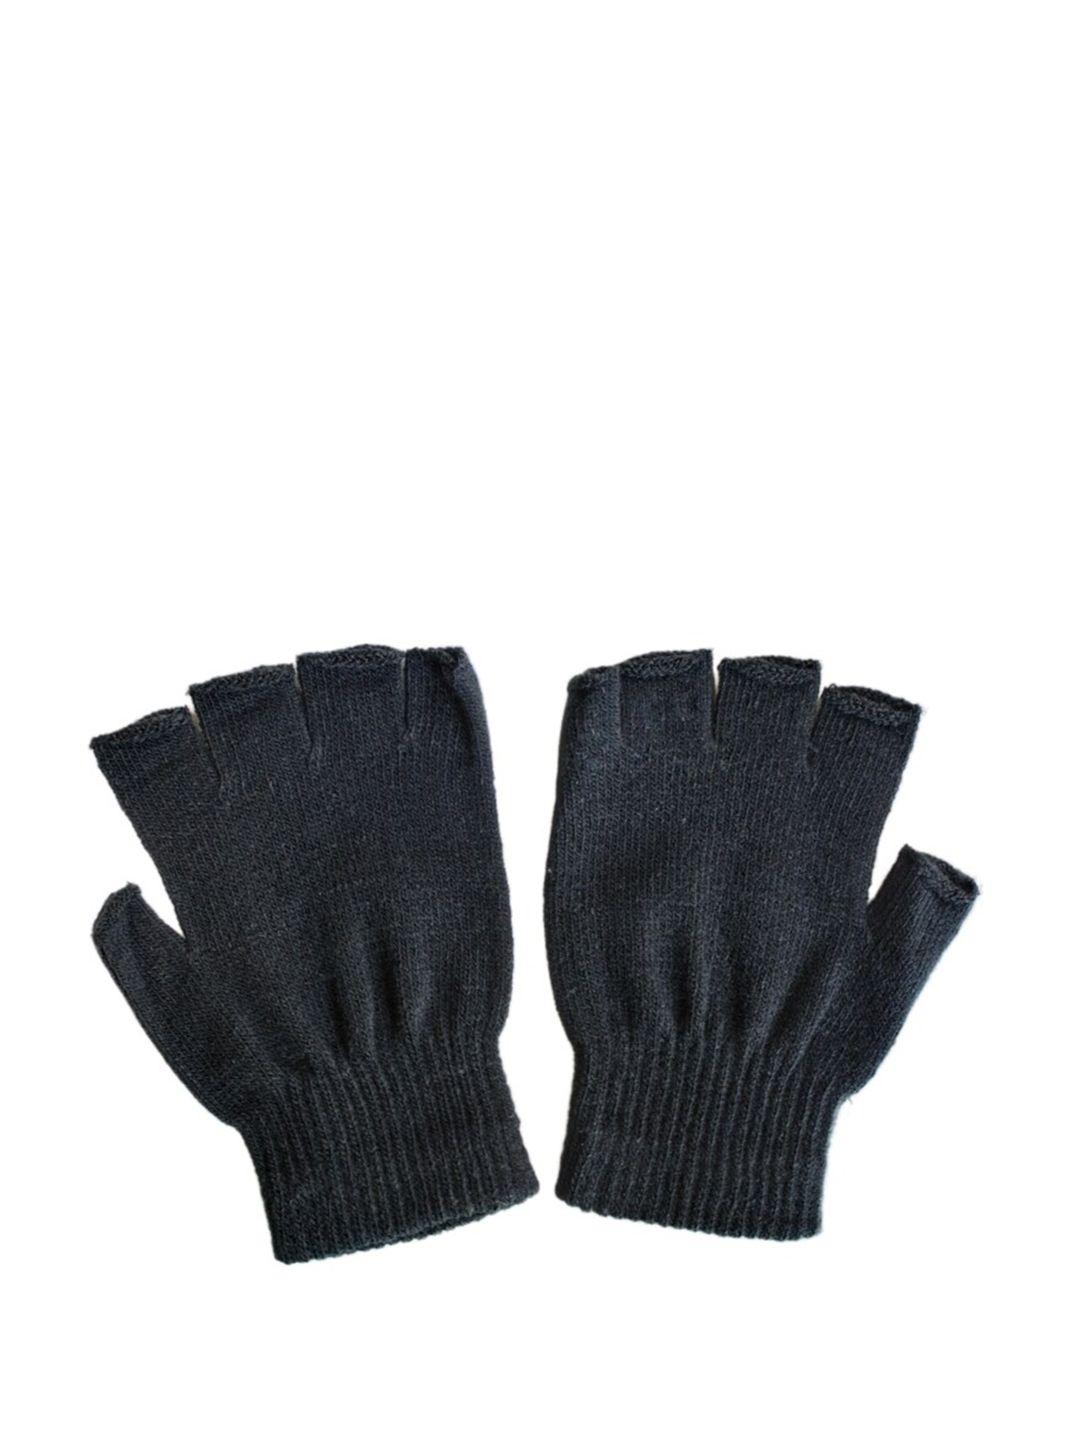 tipy-tipy-tap-girls-half-finger-acrylic-winter-gloves